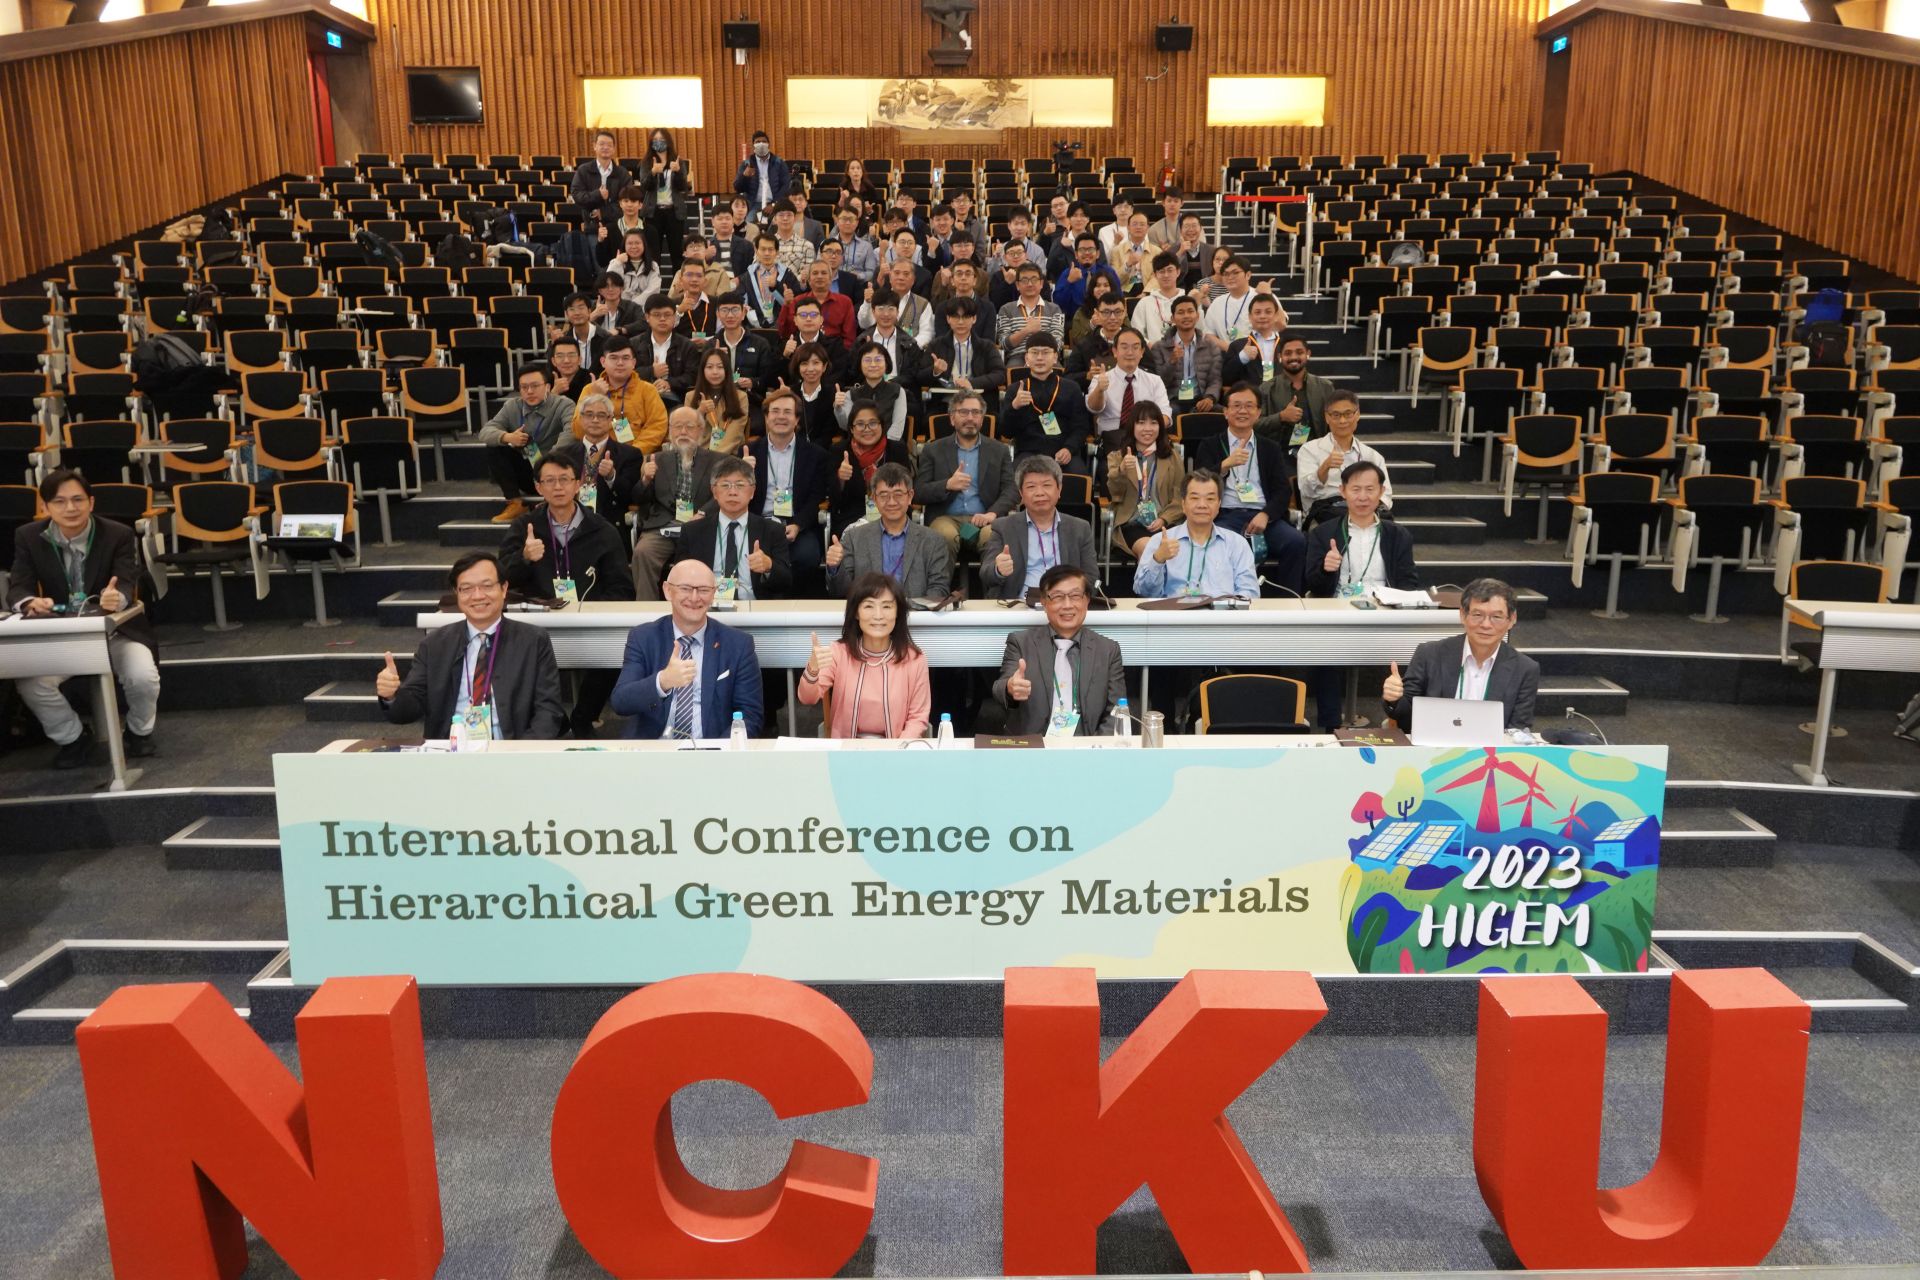 NCKU's 2023 HIGEM International Conference spotlights Prof. Martin Winter and other global experts.